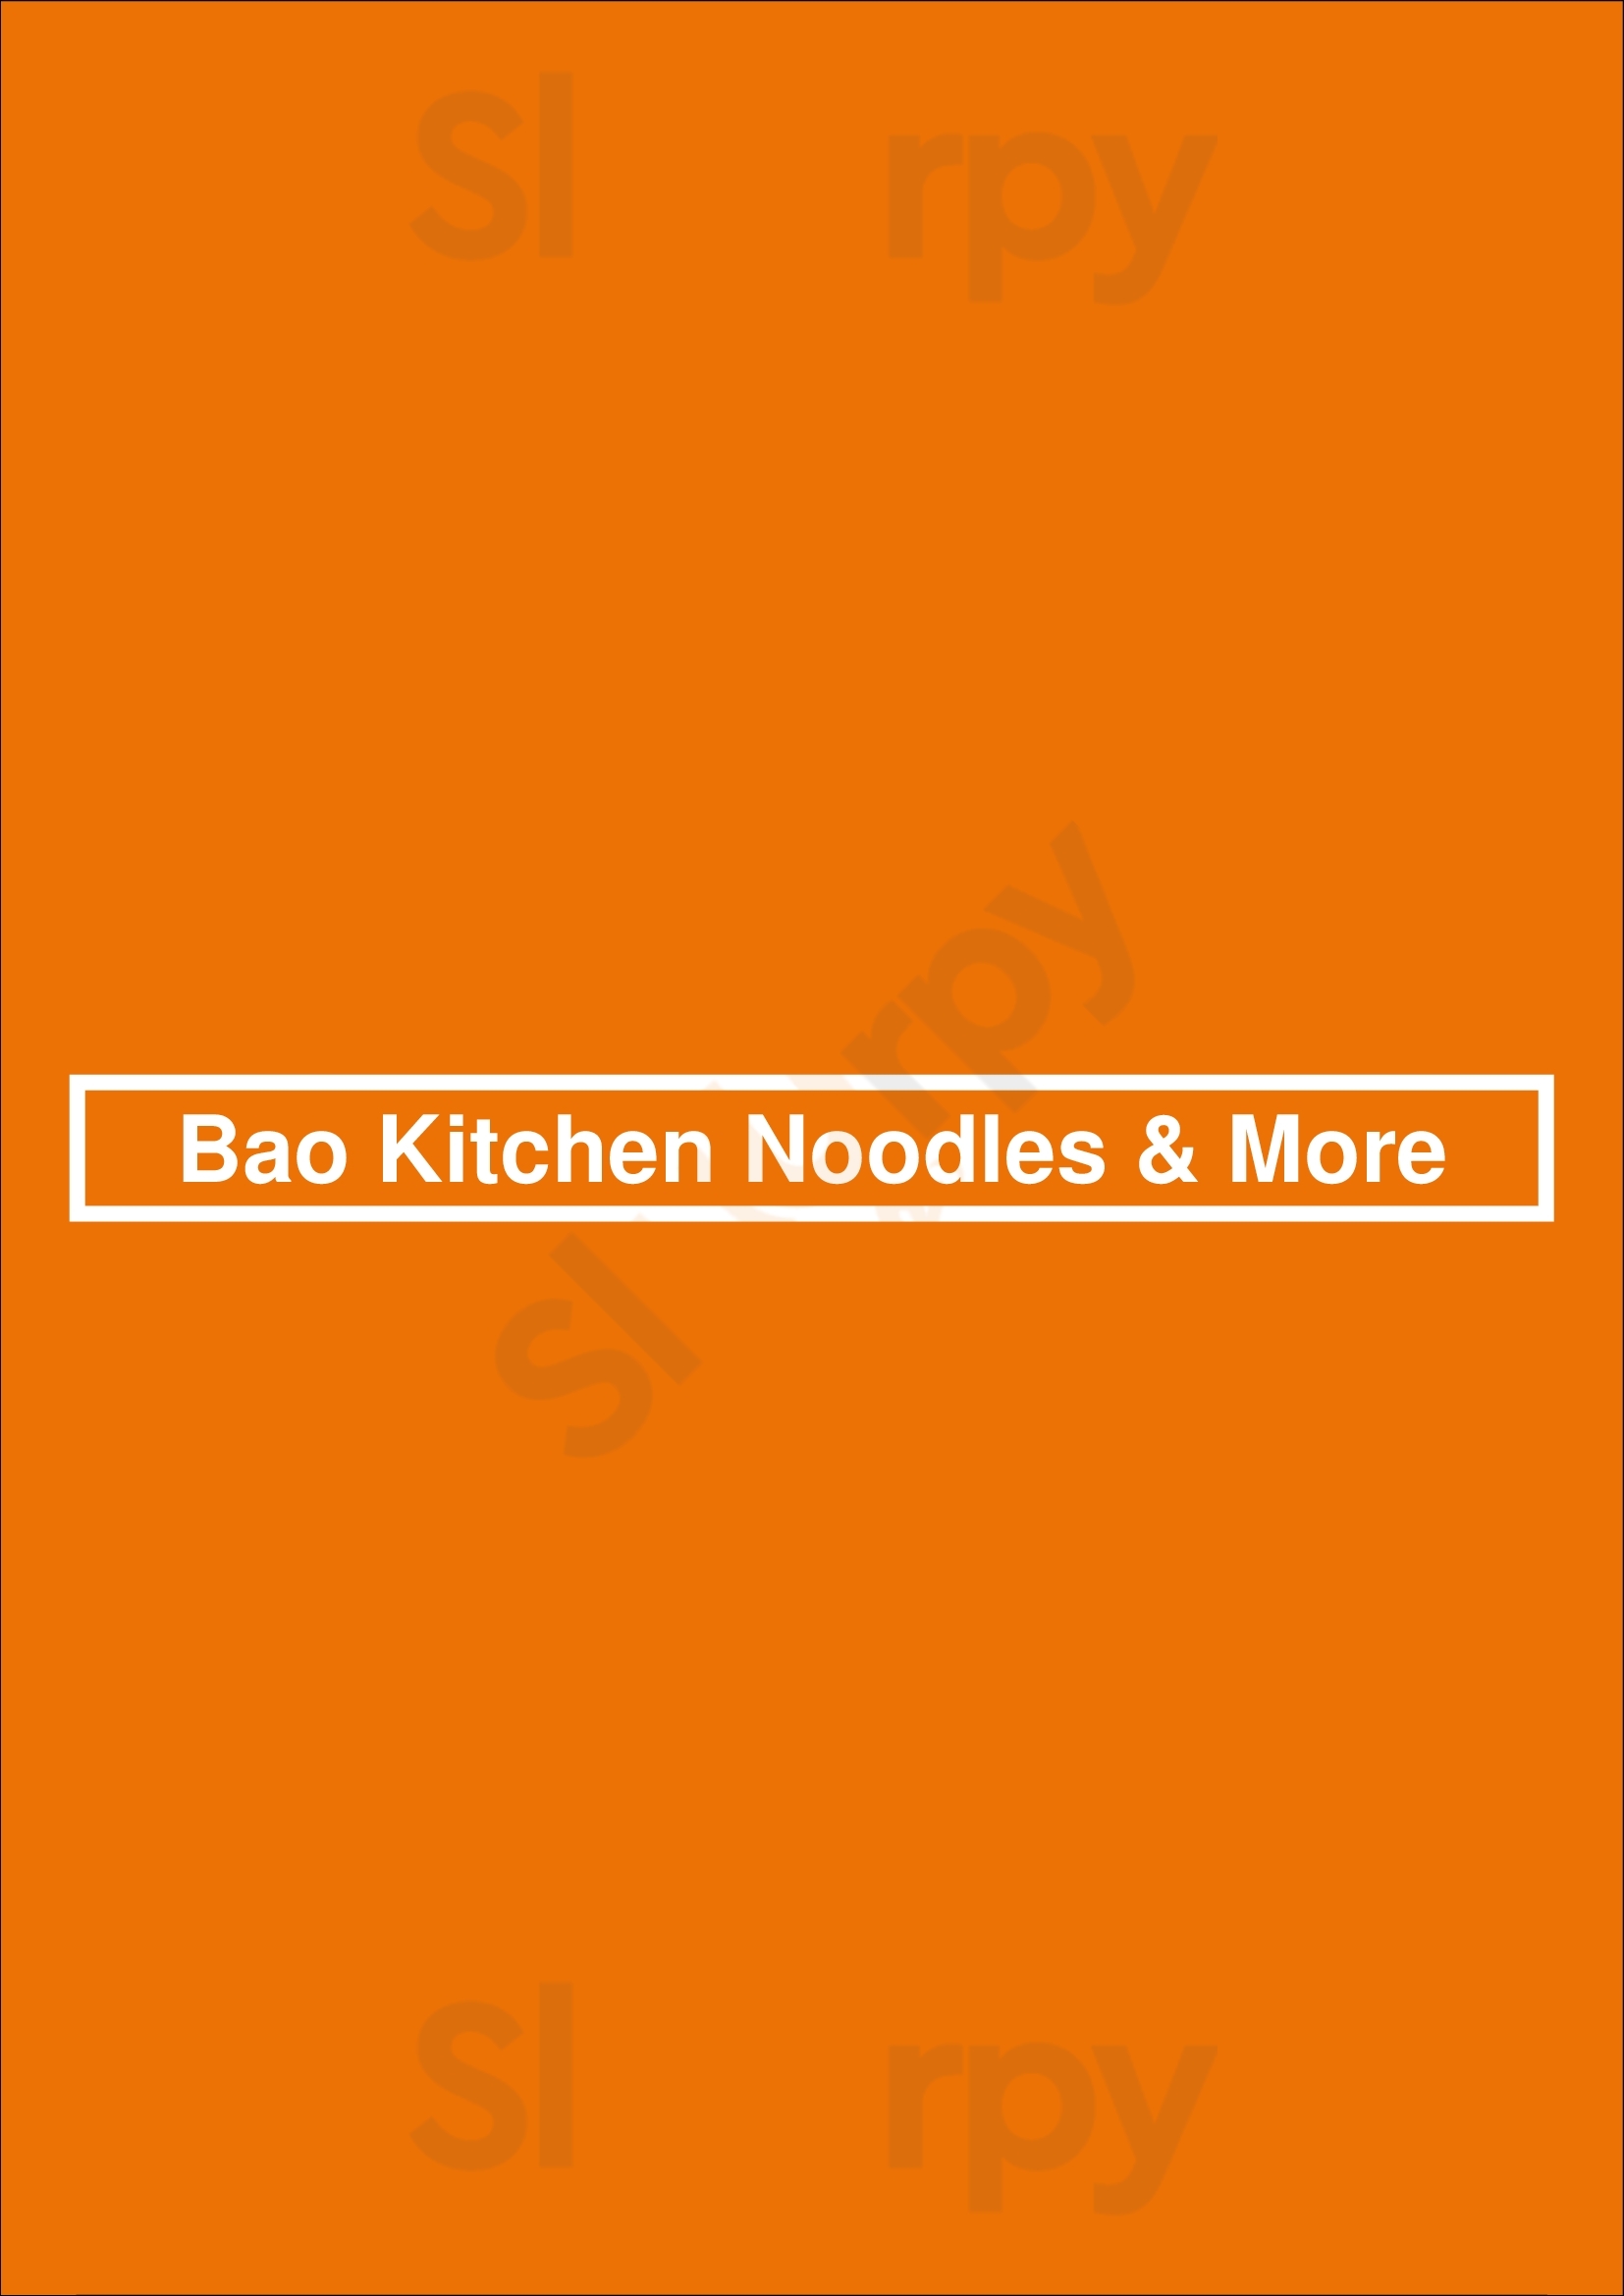 Bao Kitchen Noodles & More Buenos Aires Menu - 1